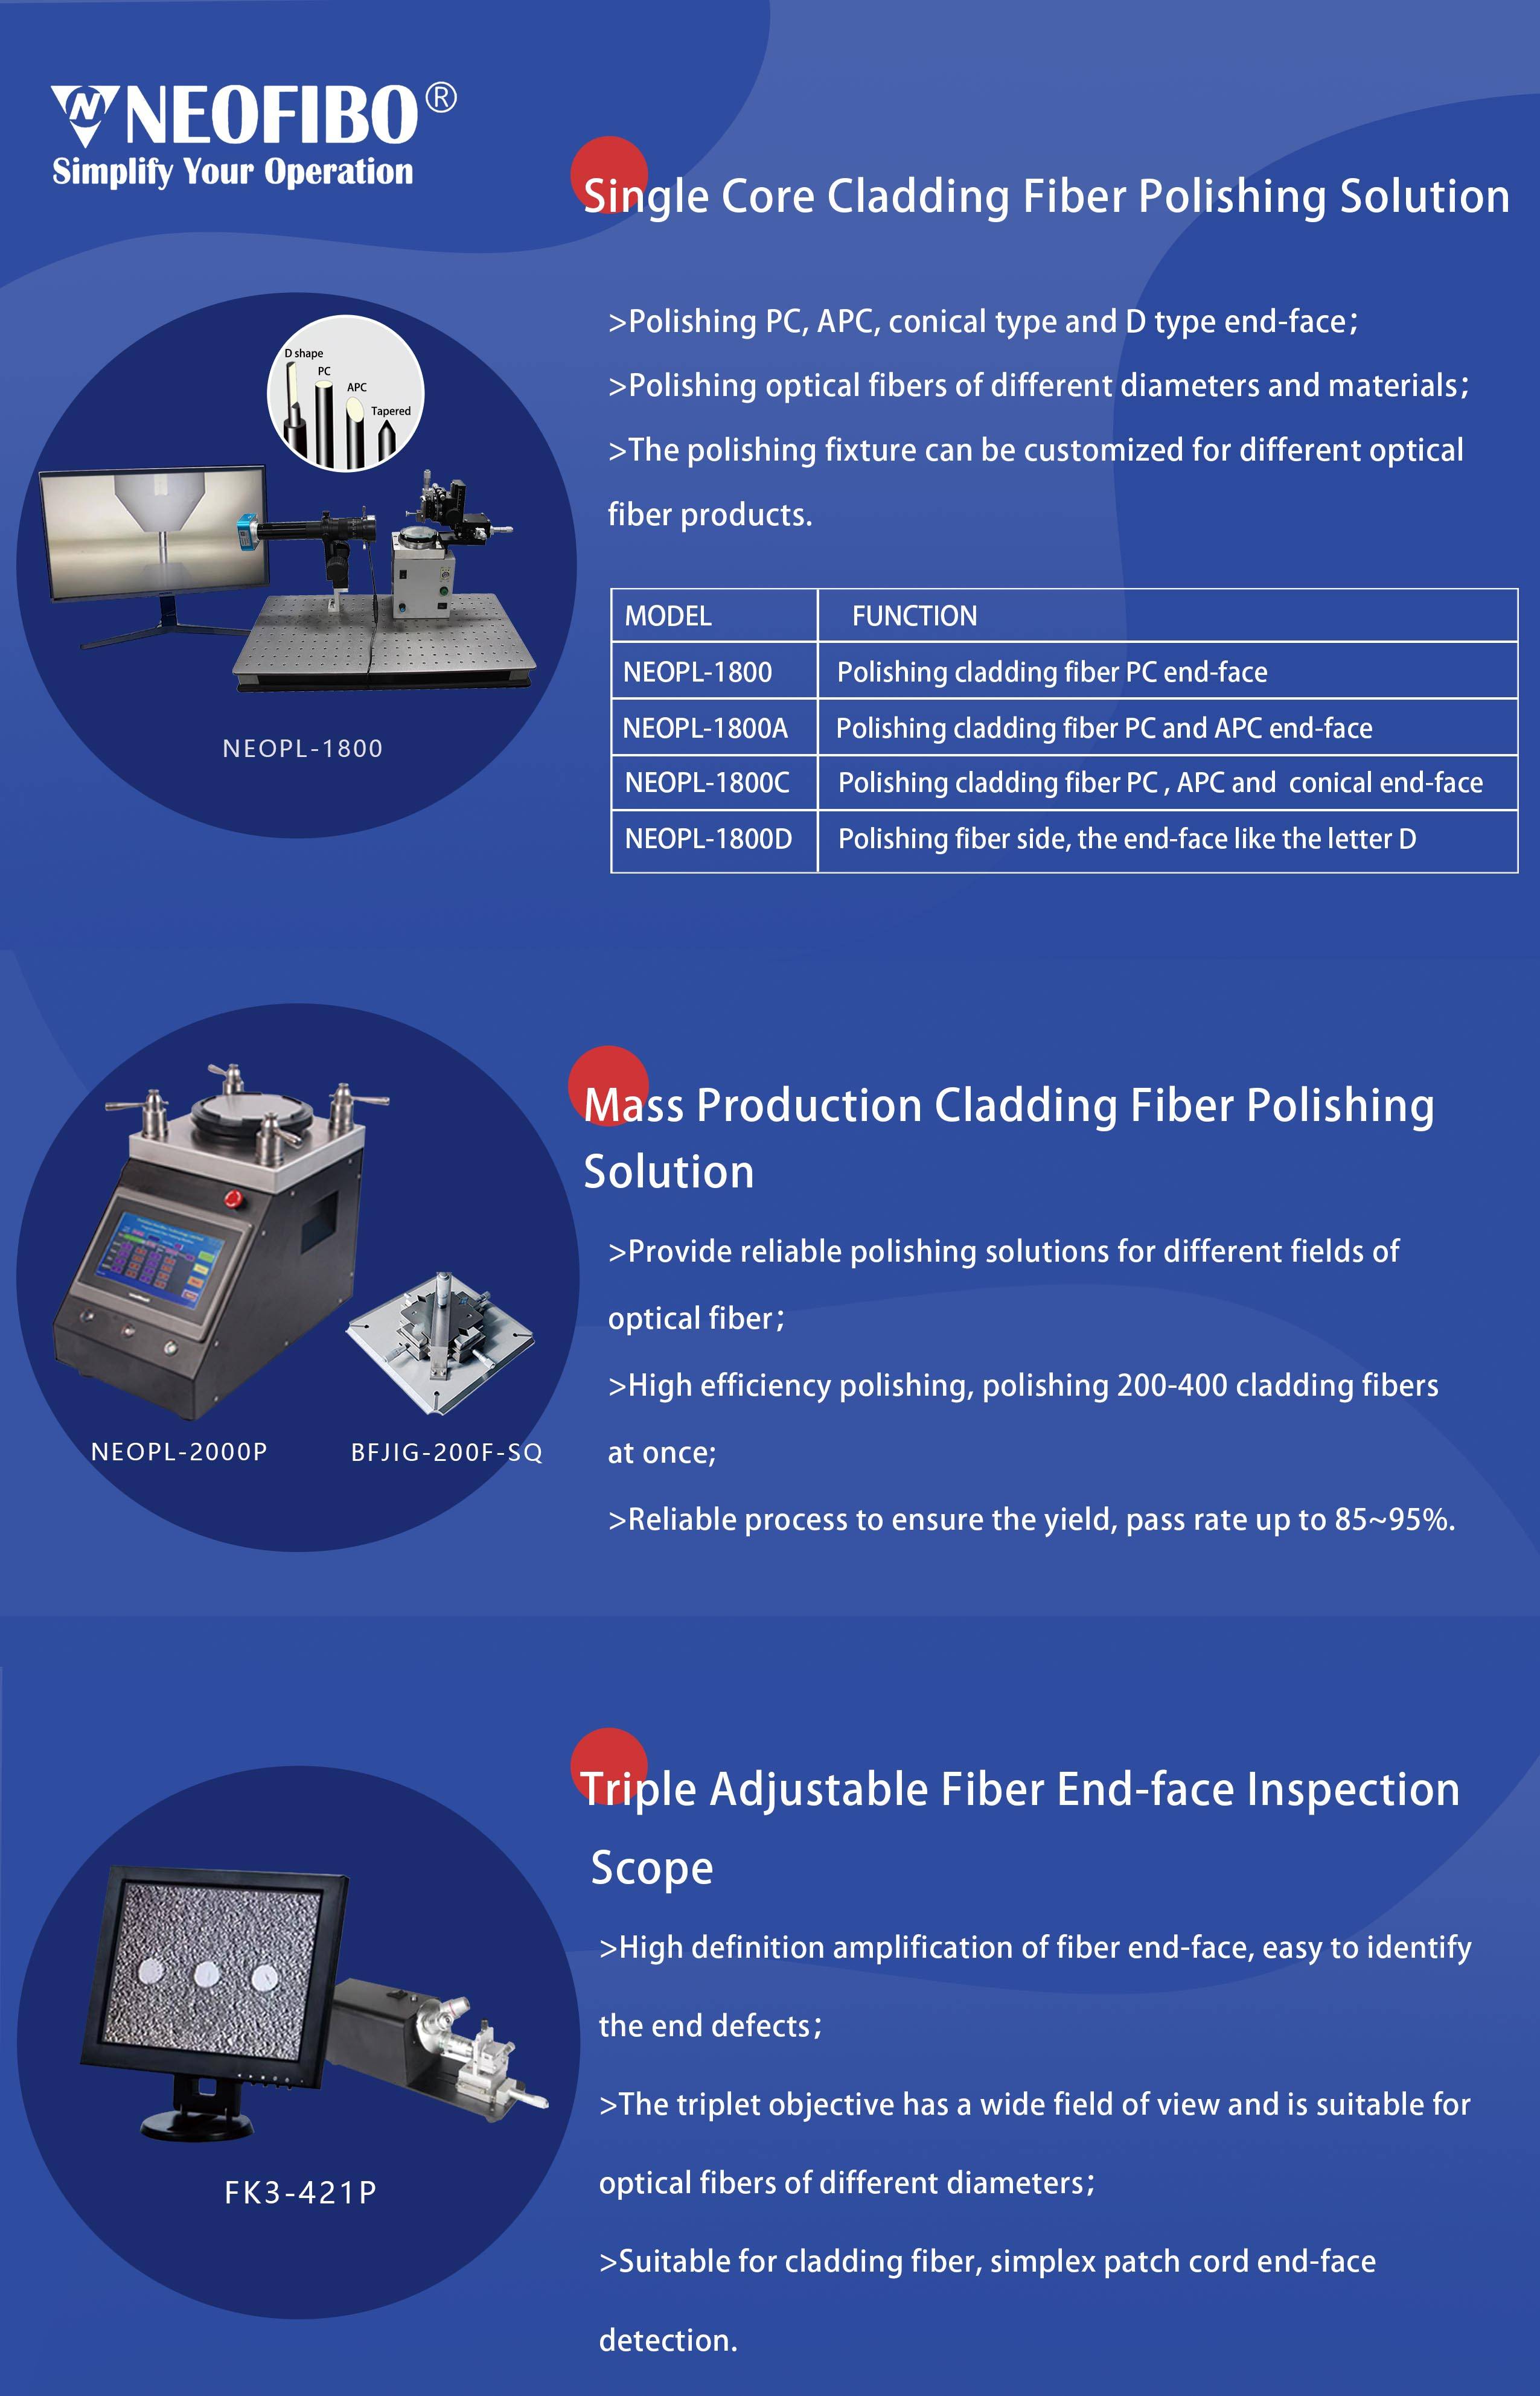 Neofibo fiber optic polishing solution